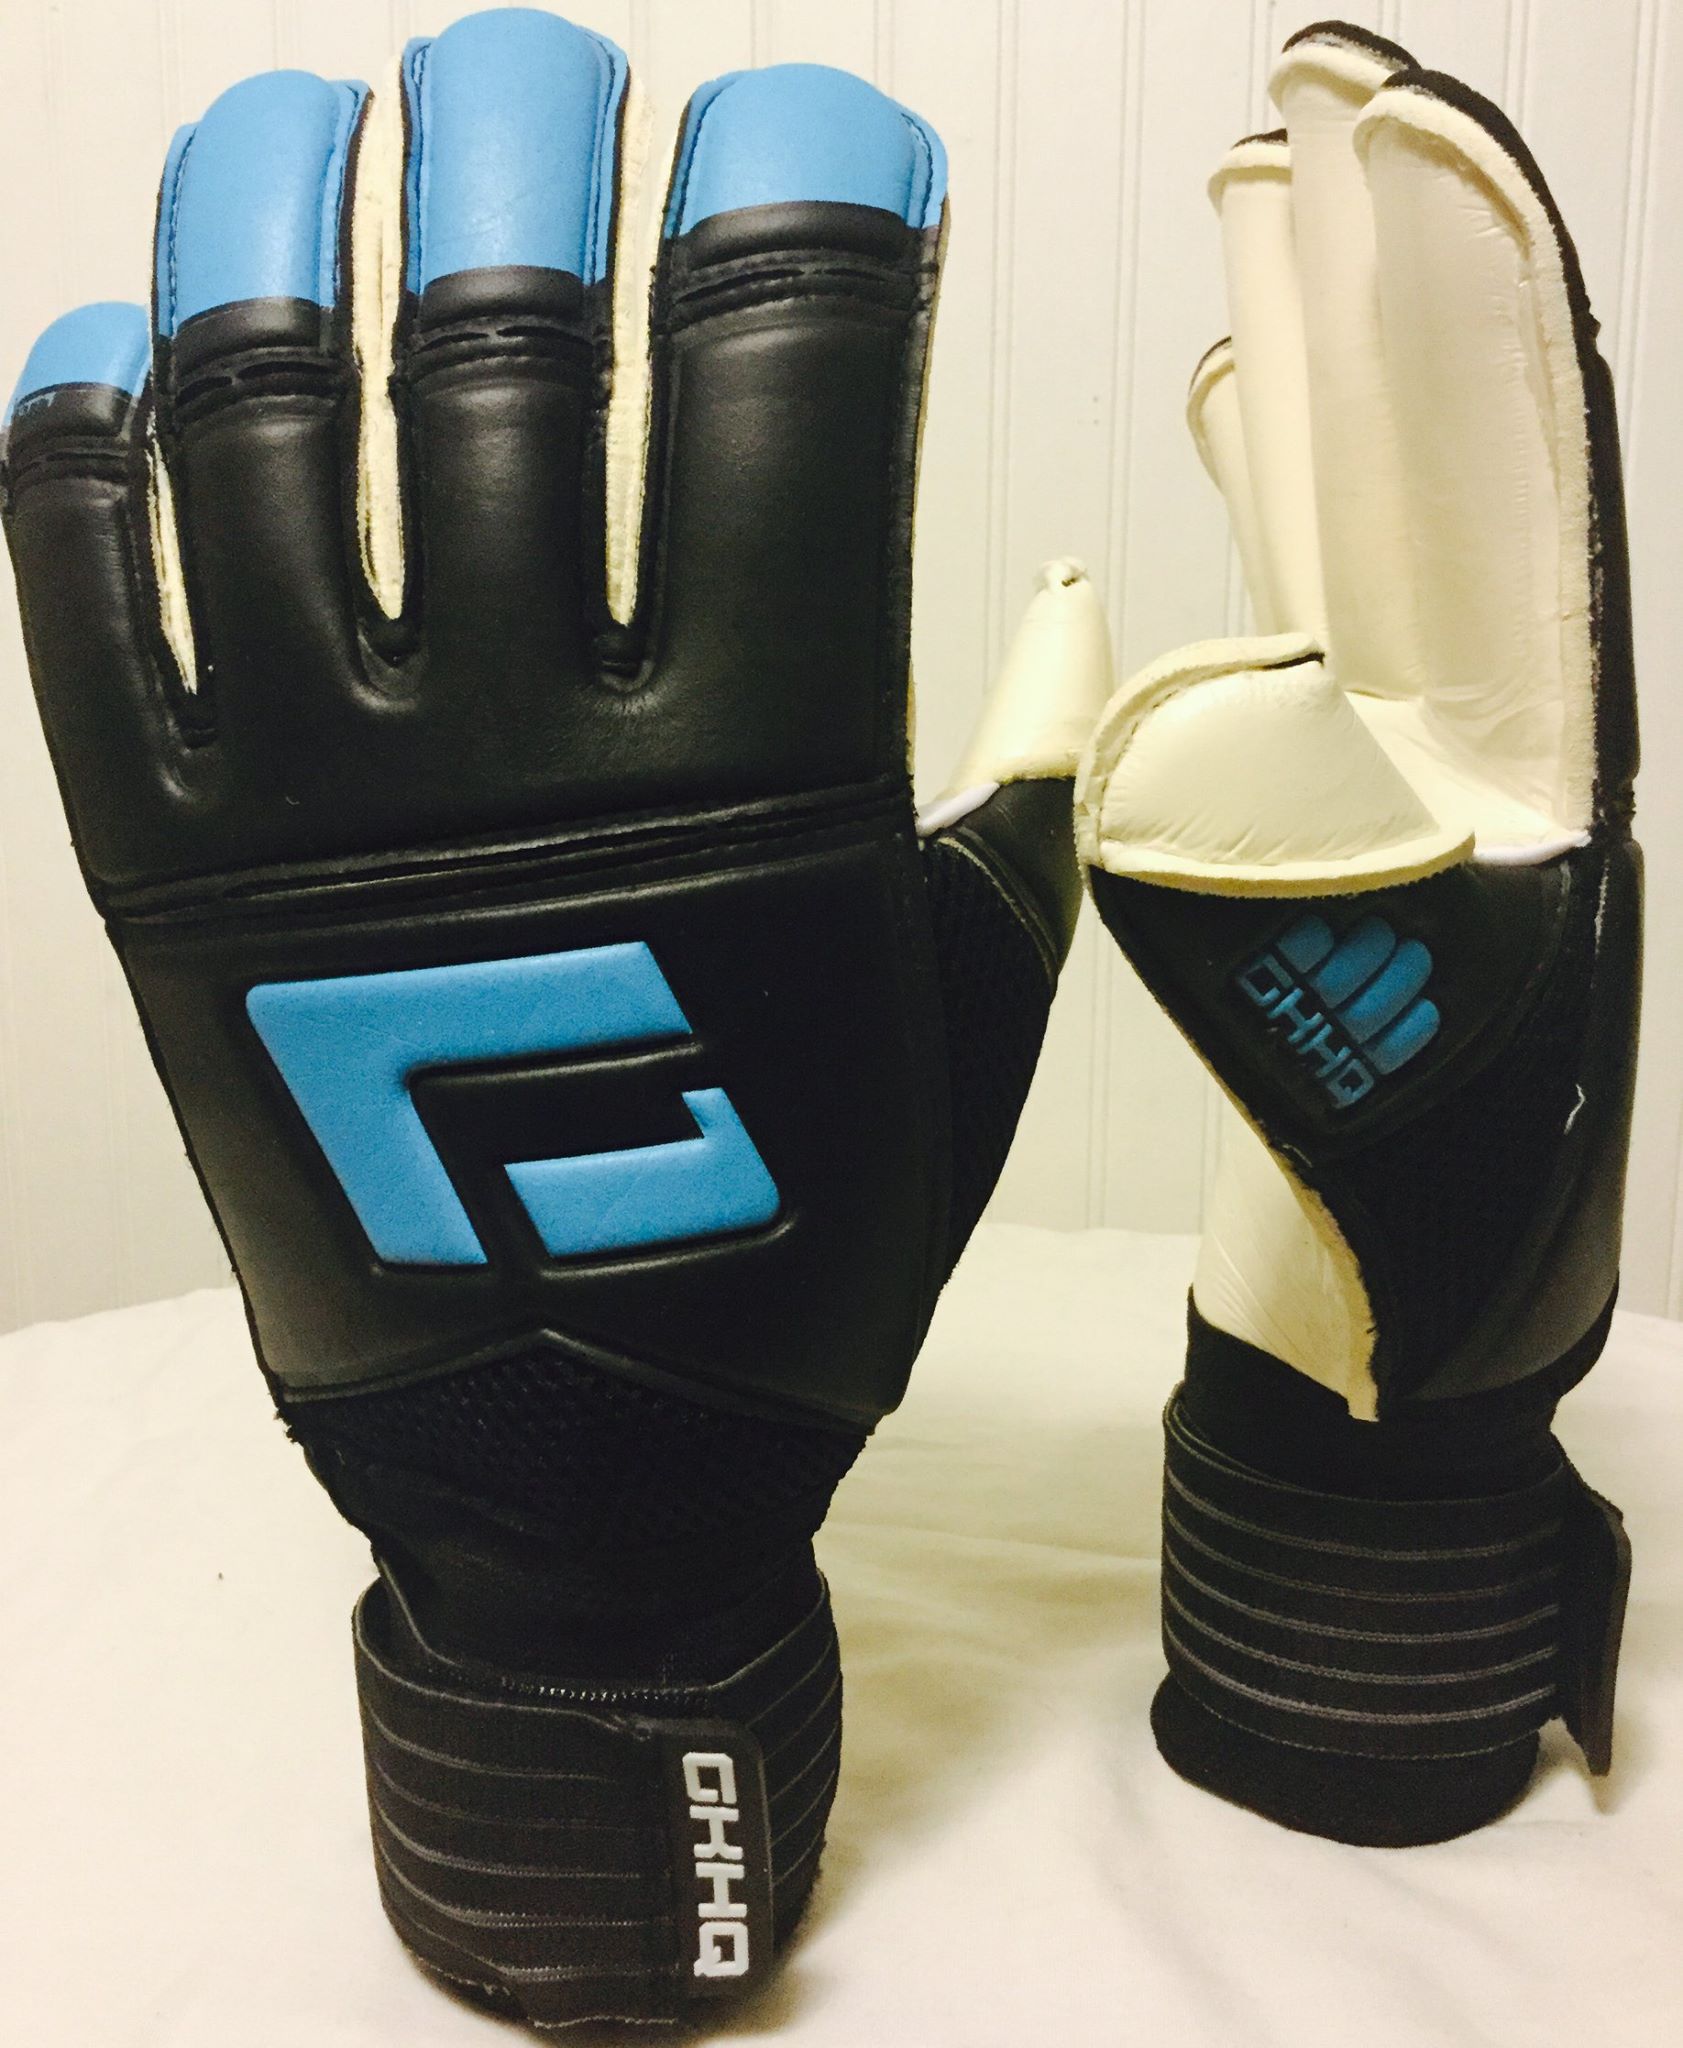 L1 Goalkeeper Gloves 2nd Generation (Electric Blue). Junior sizes